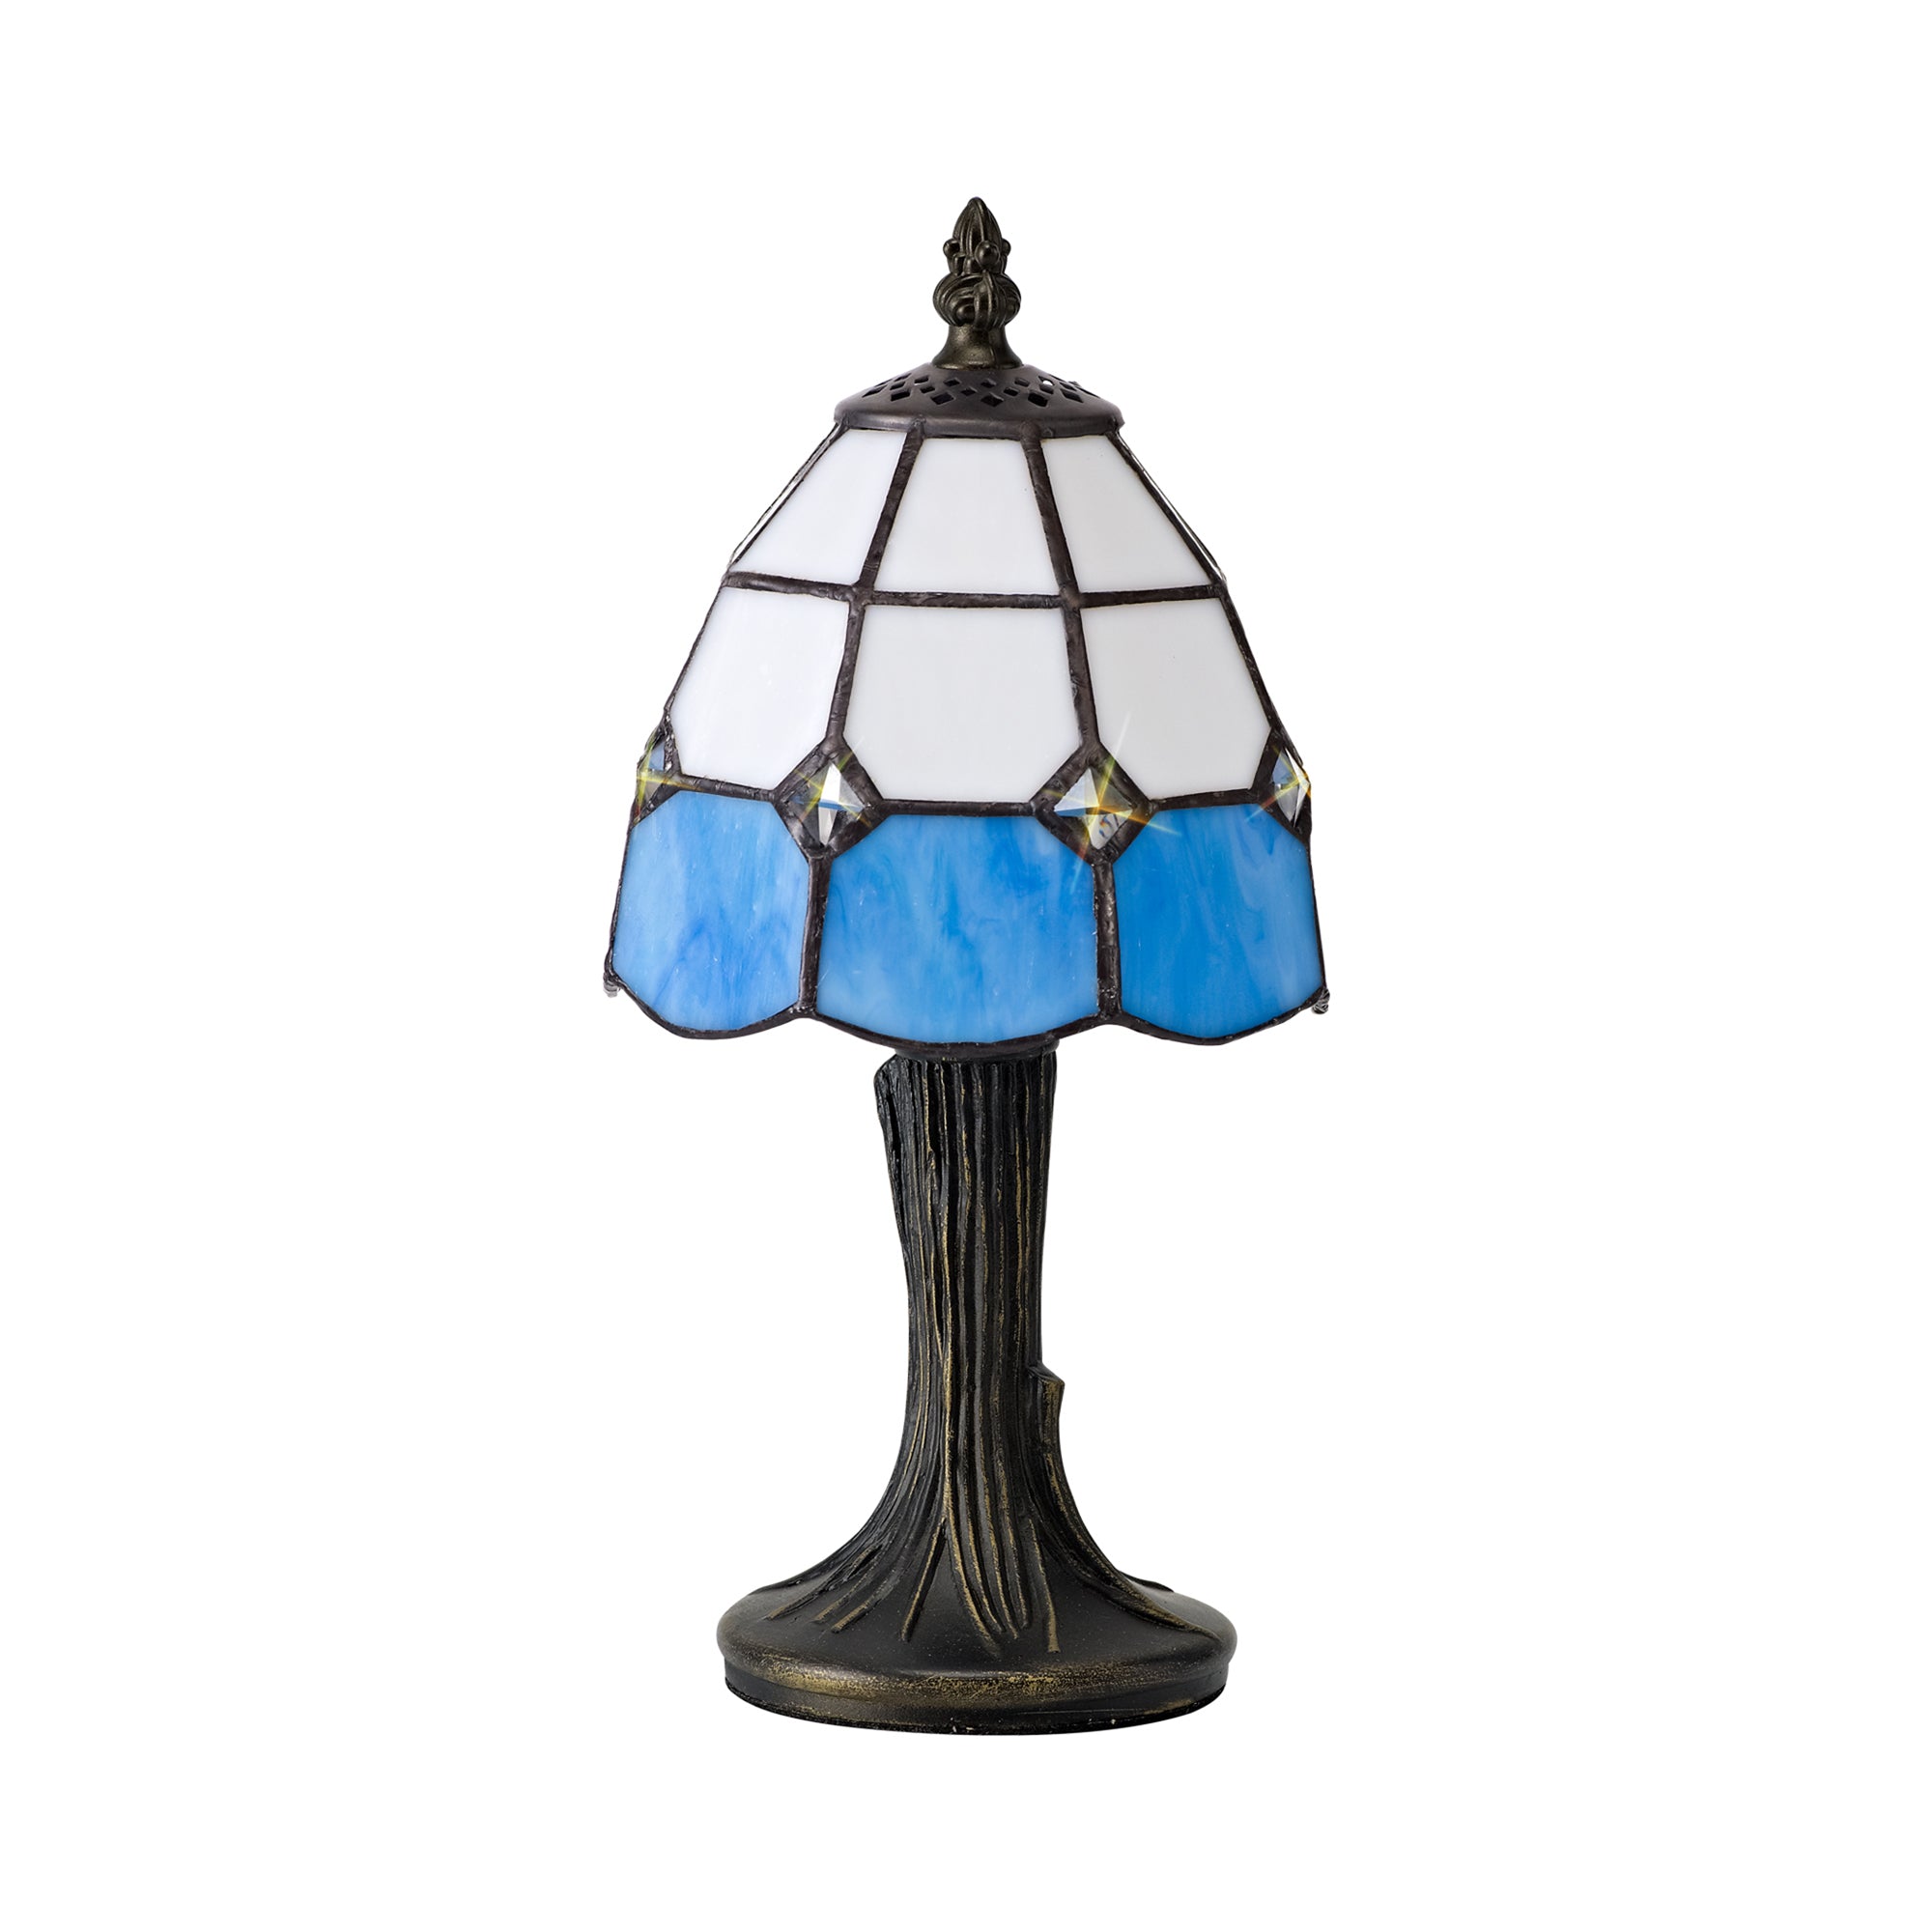 Vinceta Tiffany Table Lamp, 1 x E14, White/Blue/Clear Crystal Shade